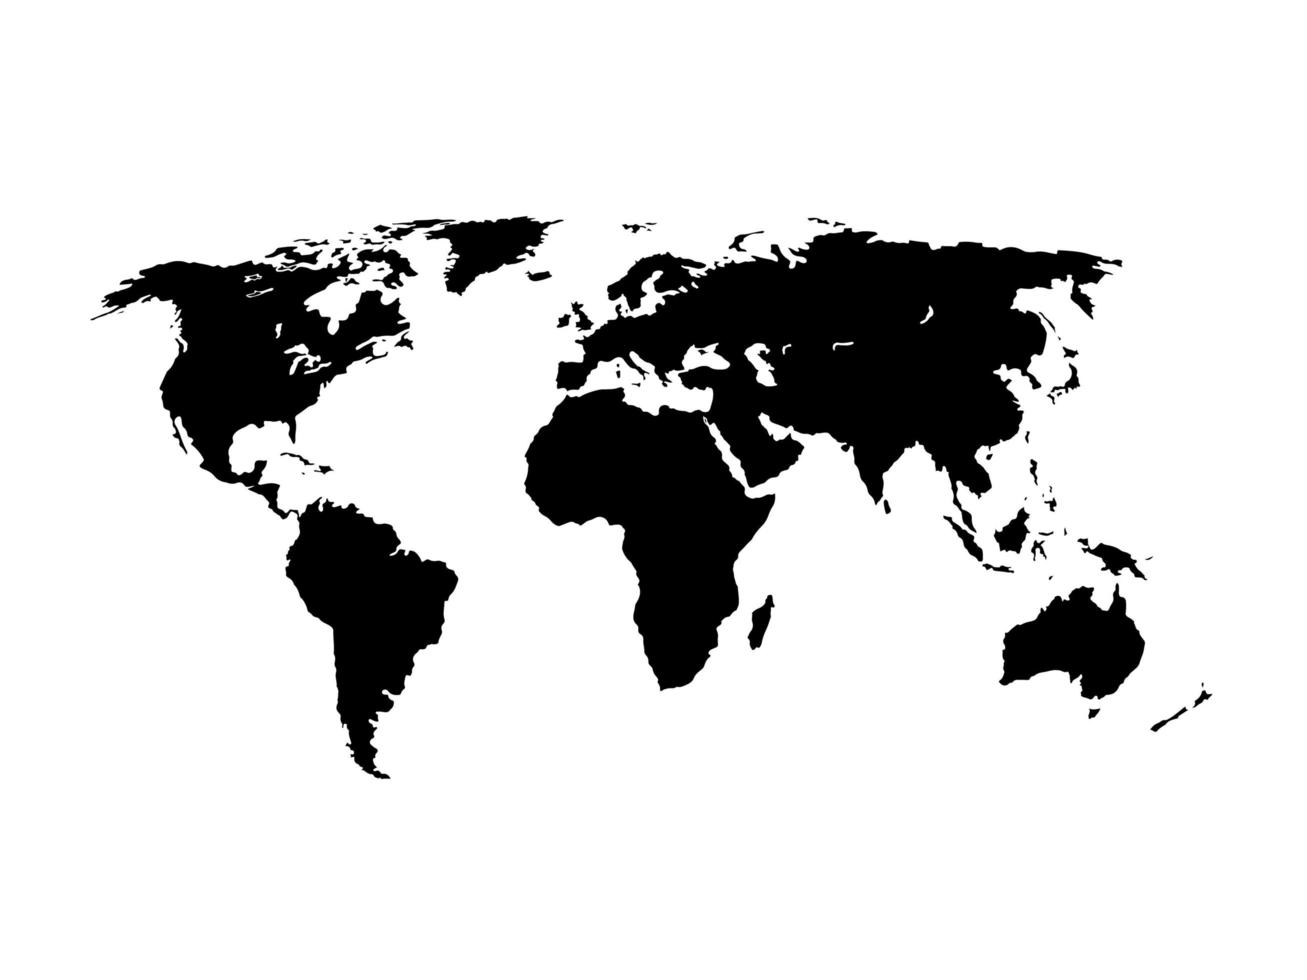 World Map silhouette vector illustration